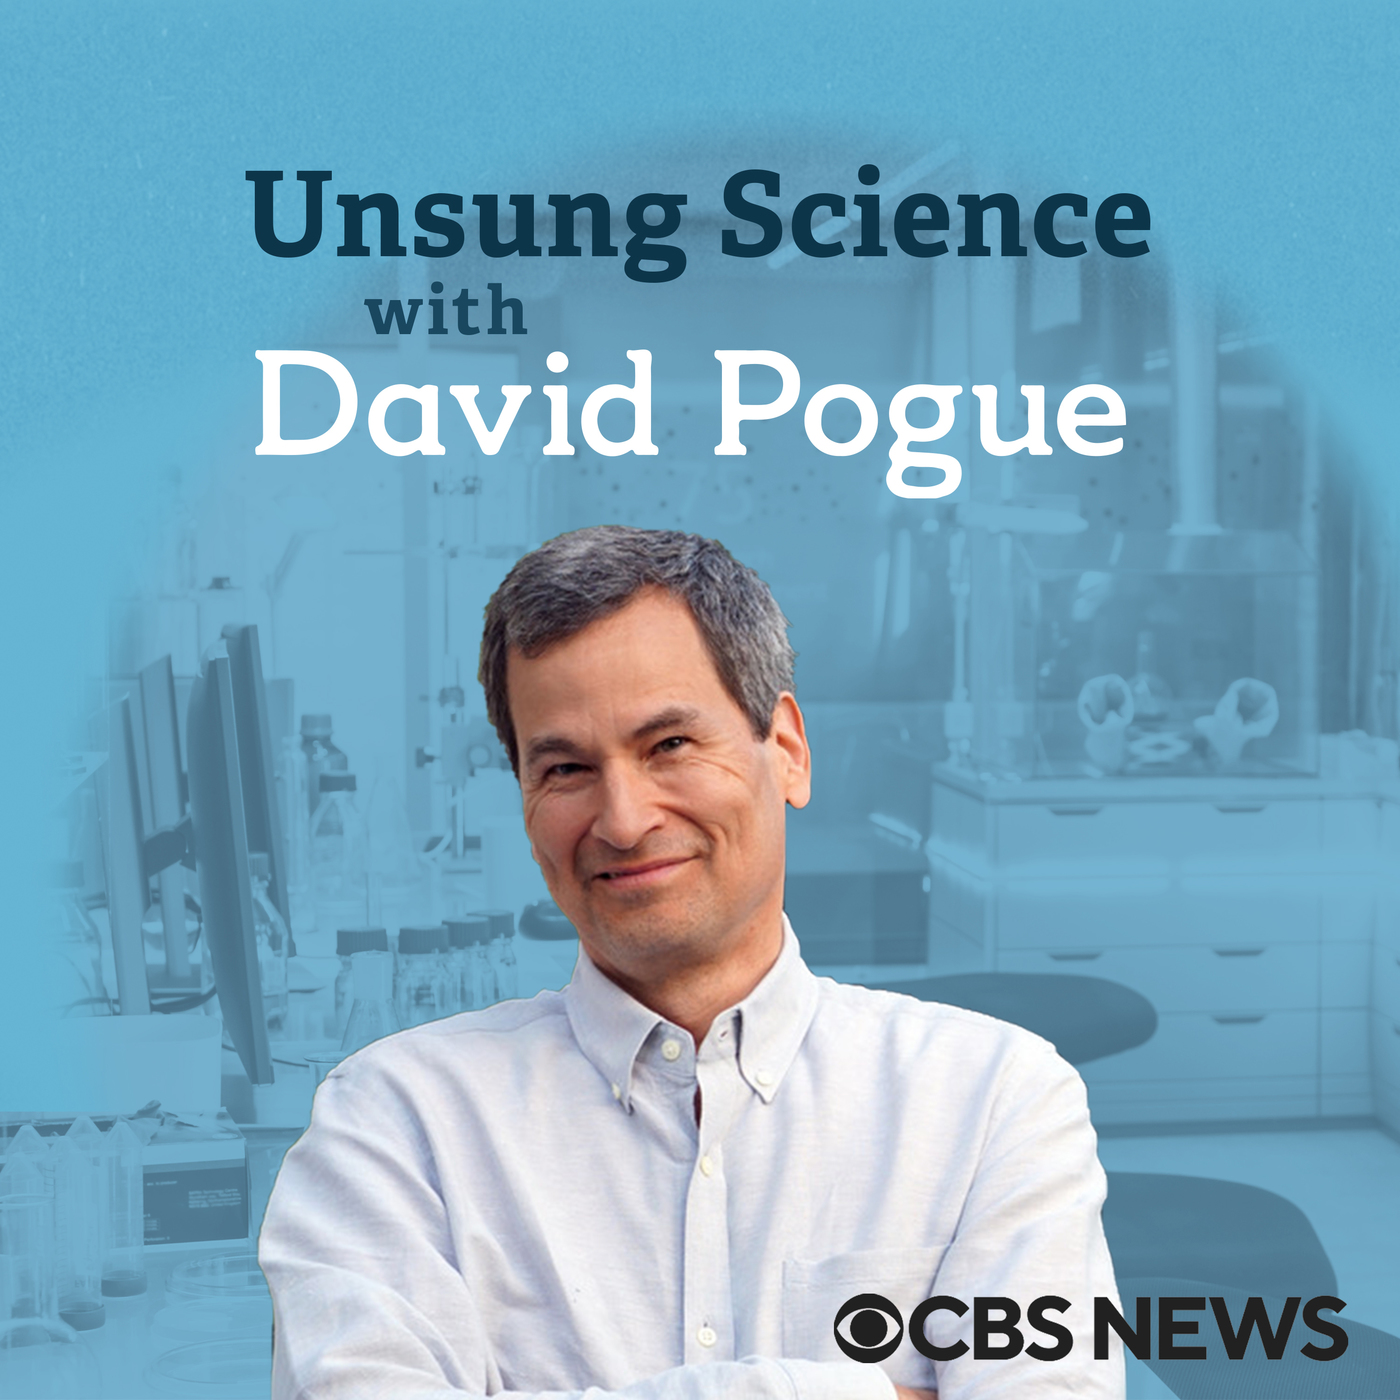 UNSUNG SCIENCE WITH DAVID POGUE